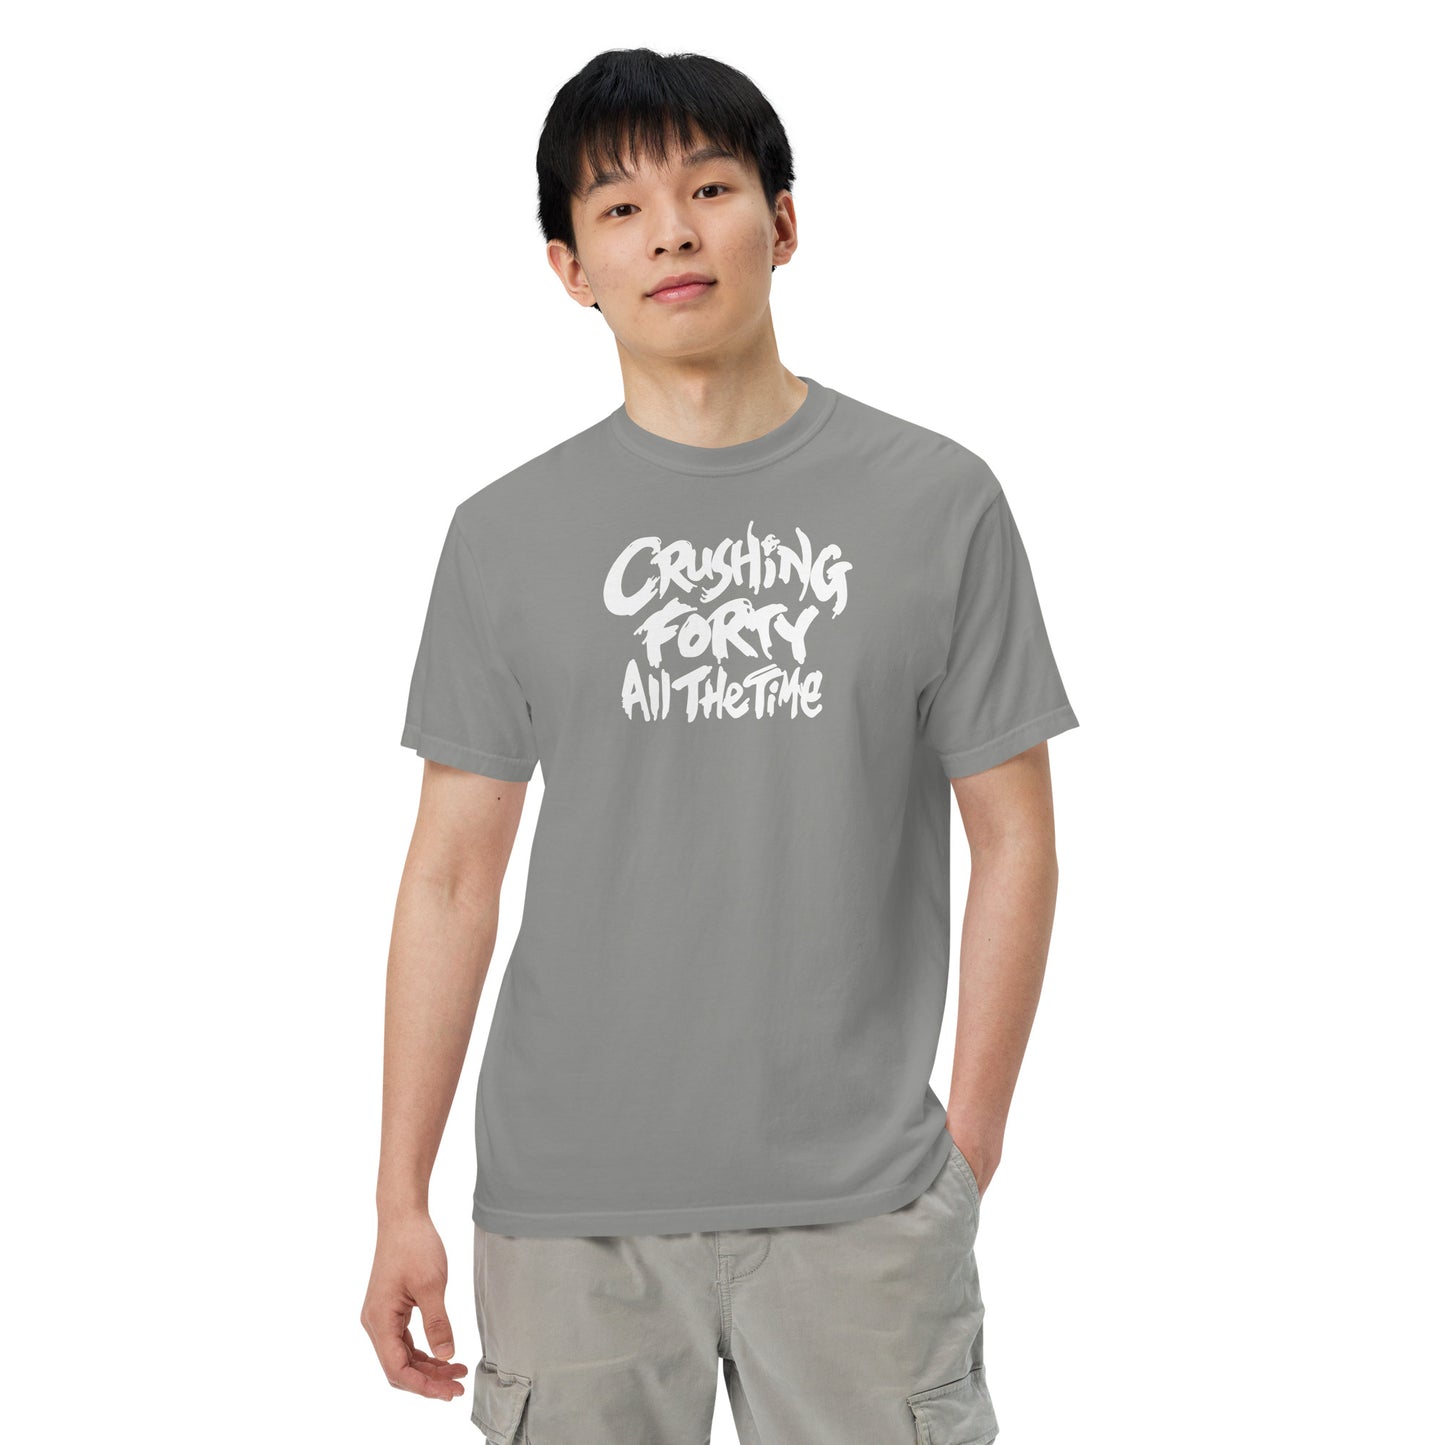 Crush40 Men’s Garment-dyed Heavyweight T-shirt